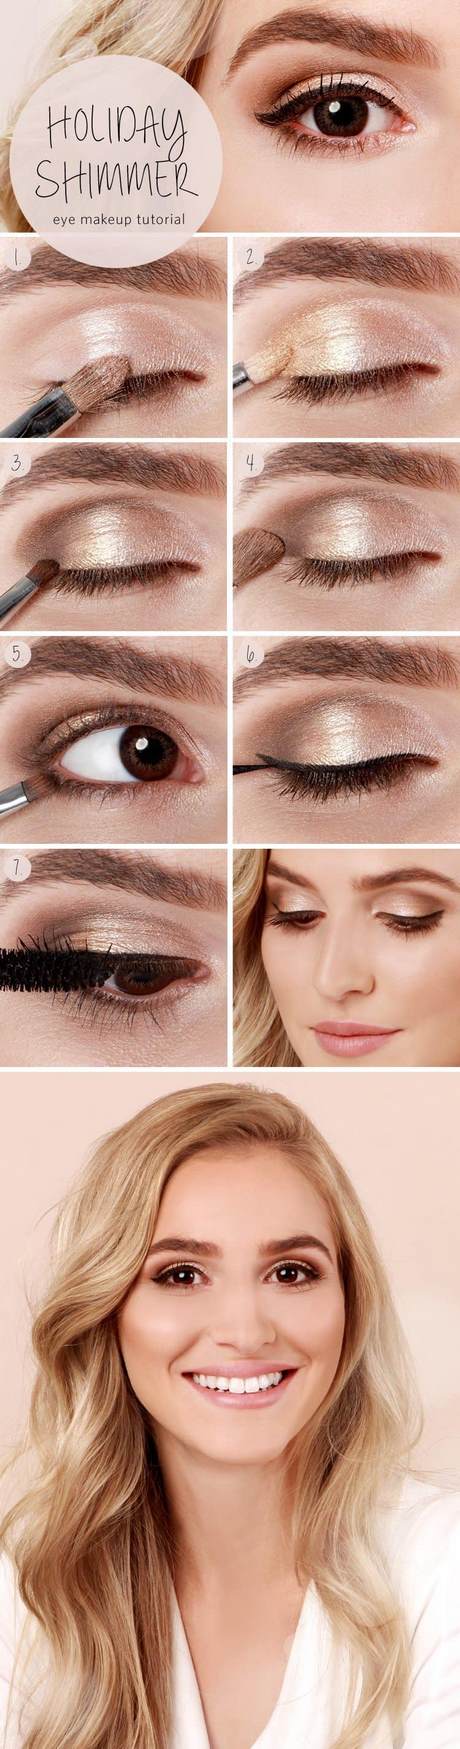 makeup-tutorials-beginner-03_3 Make-up tutorials beginner